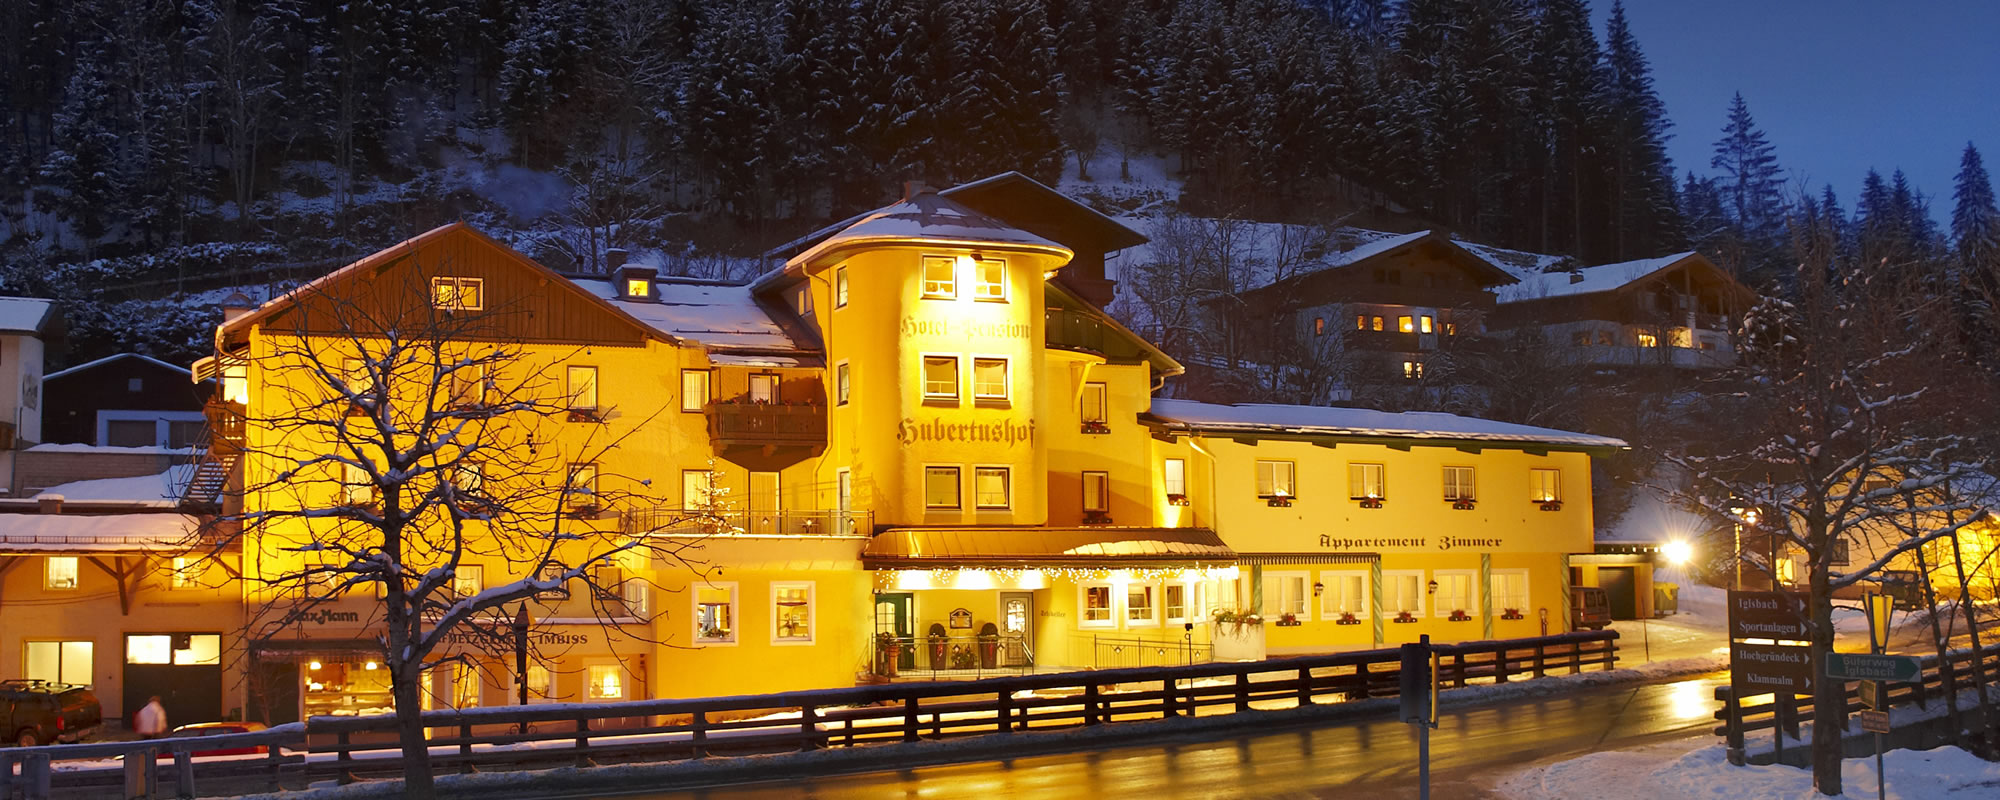 3 Stern Hotel Hubertushof, Sommerurlaub im Salzburger Land